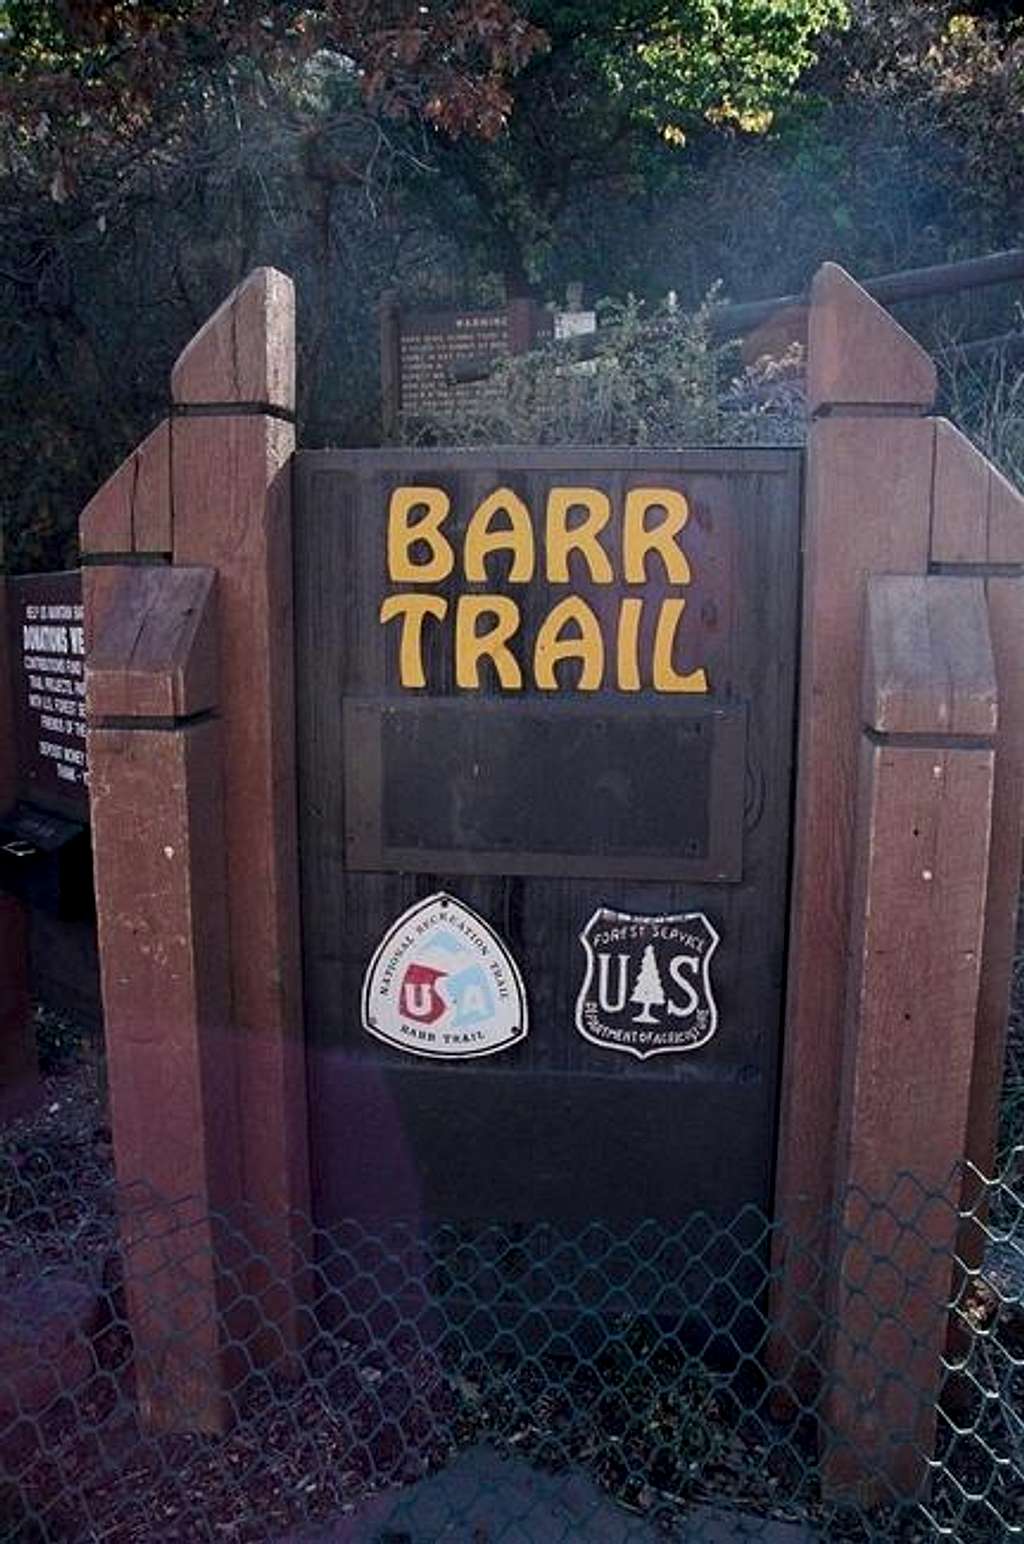 The Barr Trail trailhead sign.